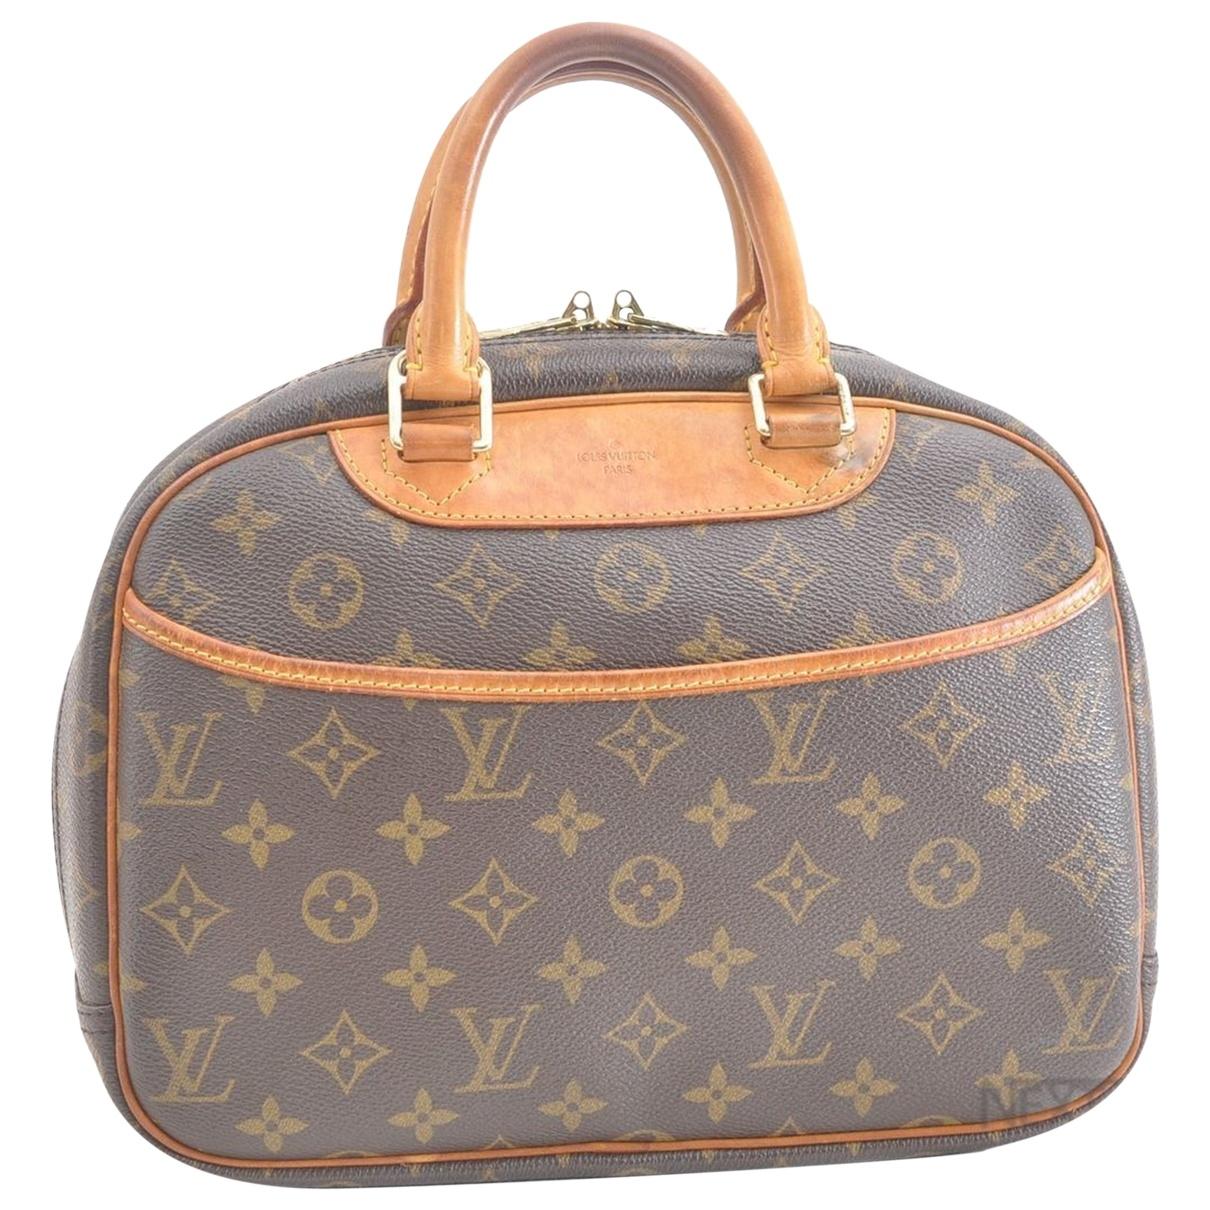 Lyst - Louis Vuitton Trouville Brown Cloth Handbag in Brown